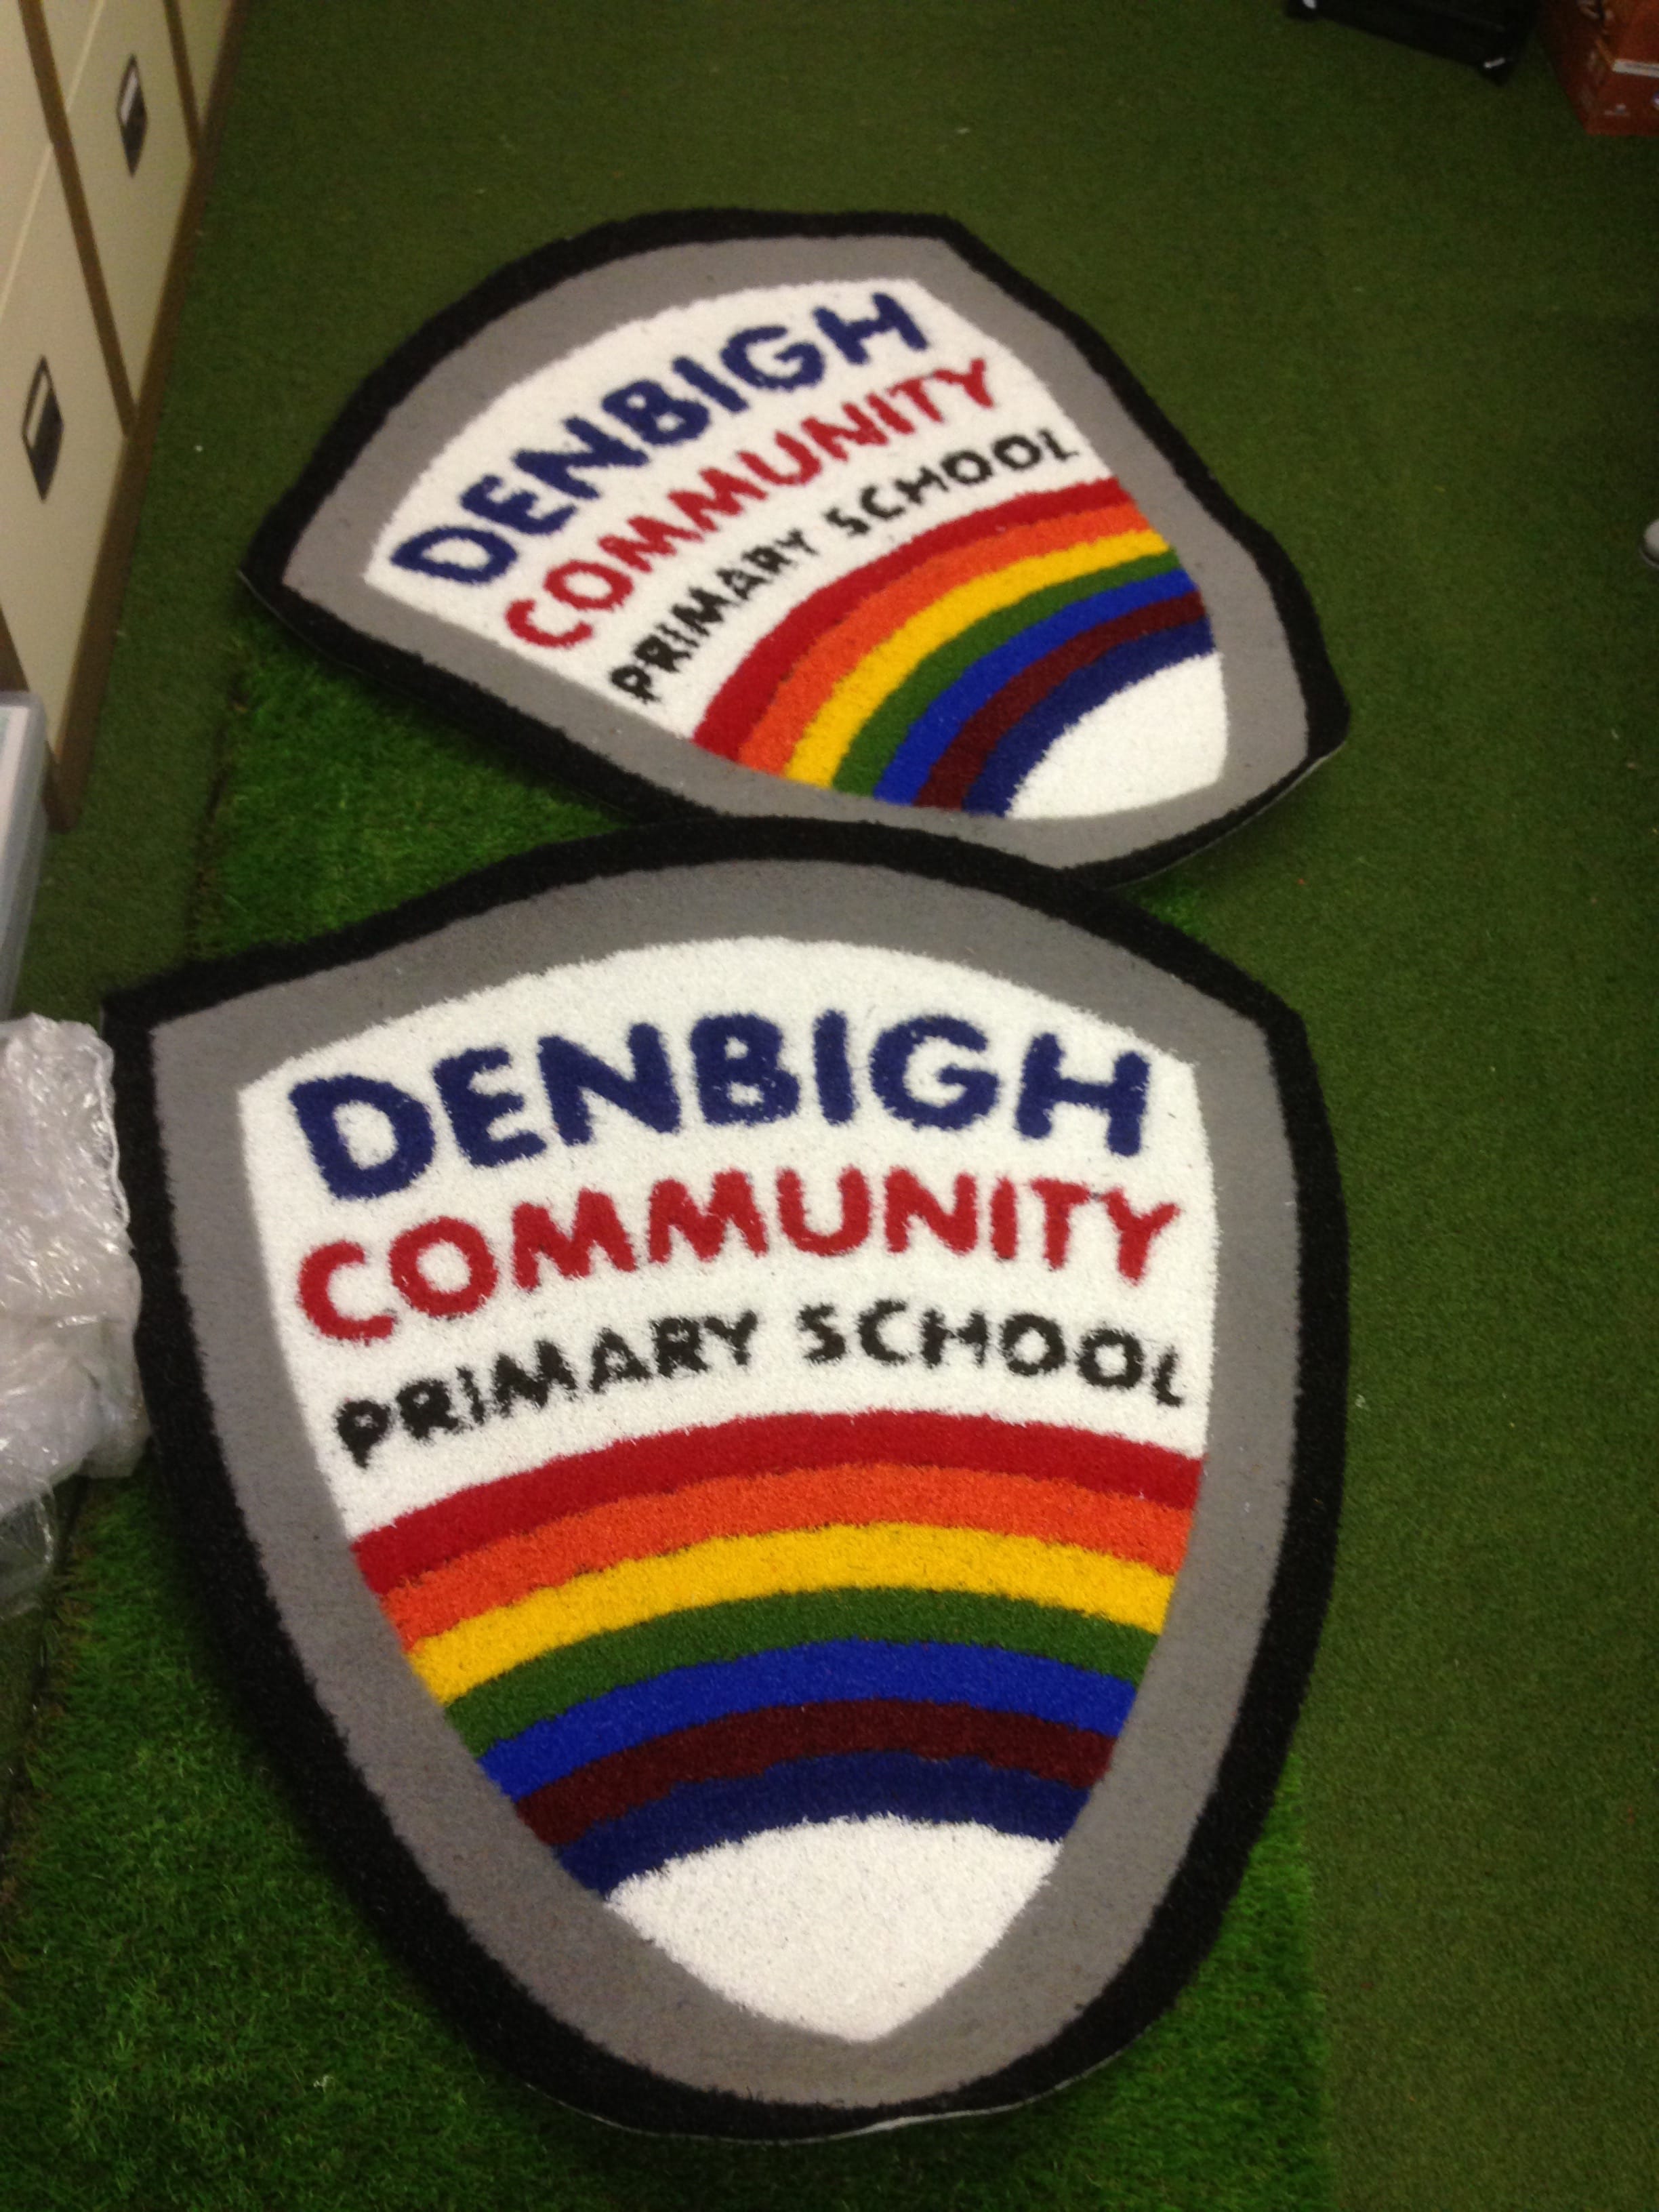 denbigh community primary school artificial turf logo mats for playground